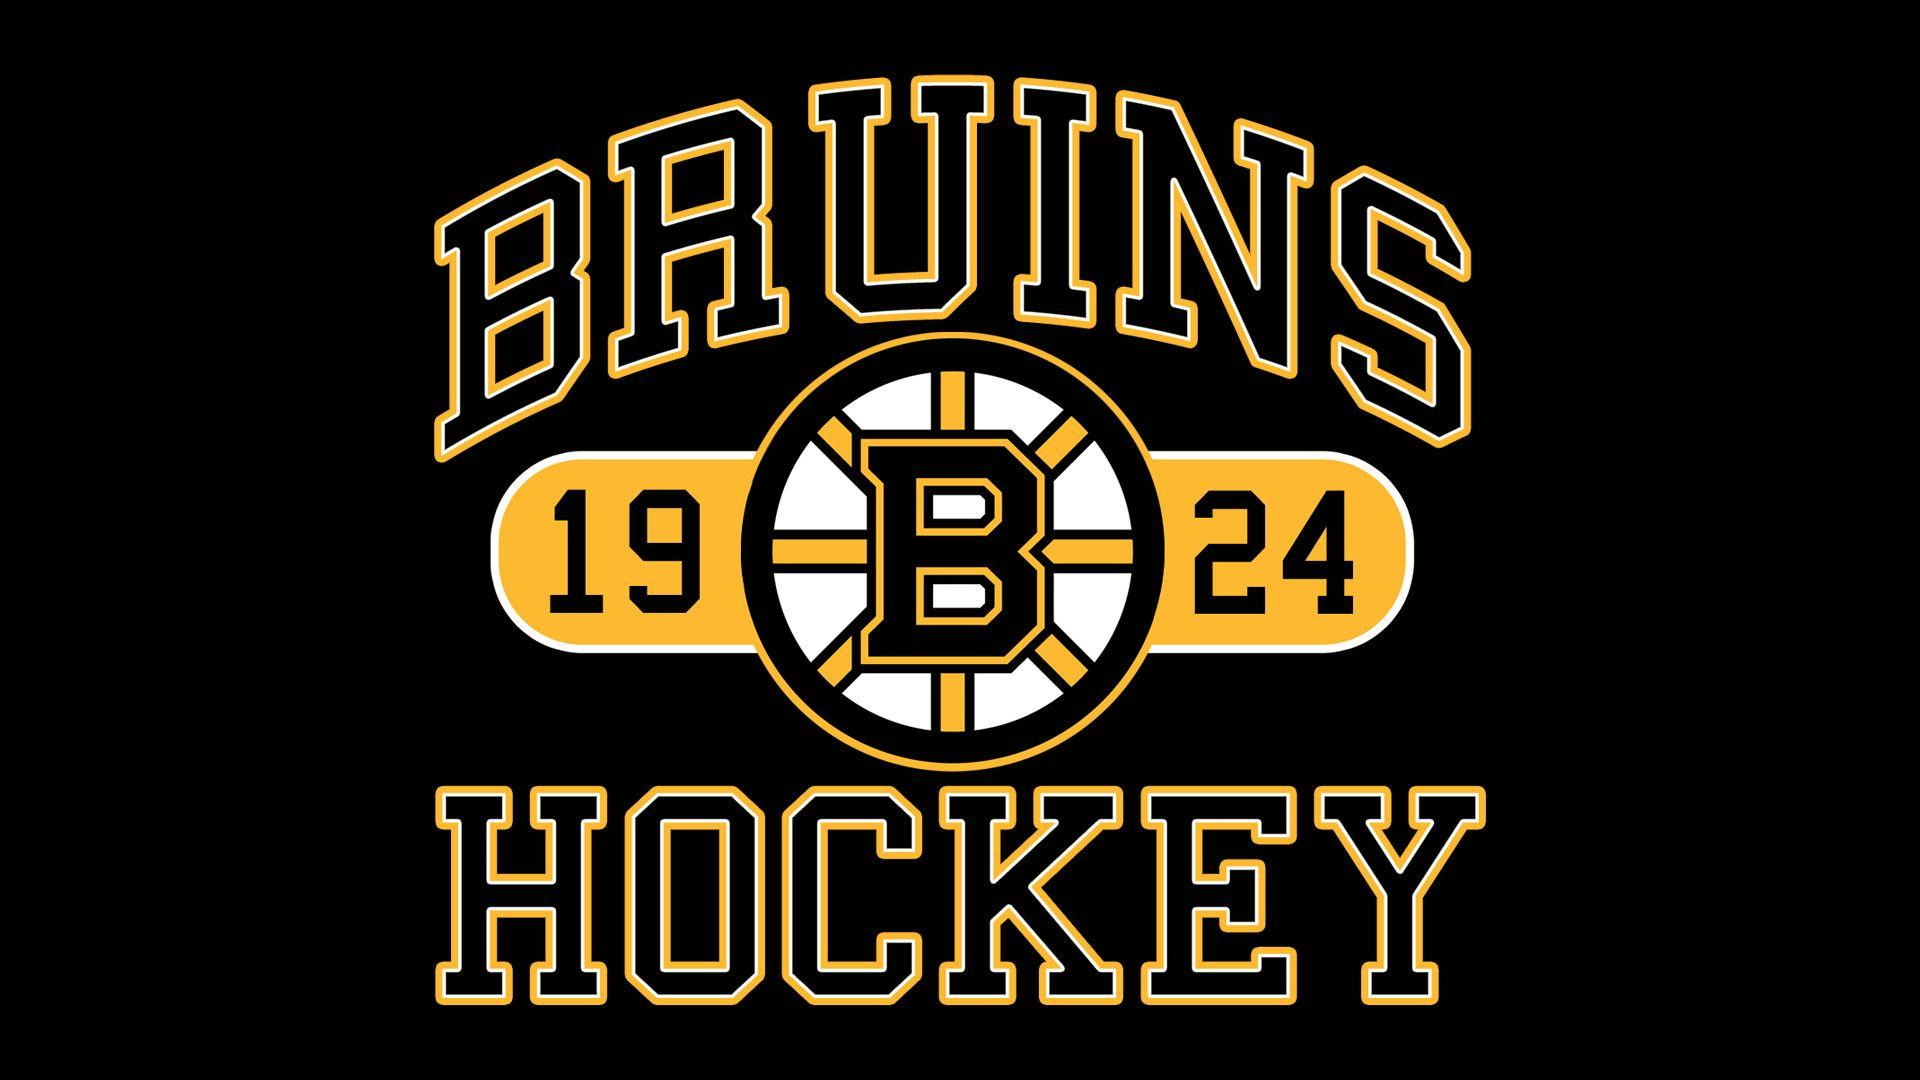 Boston Bruins Wallpapers - Top Free